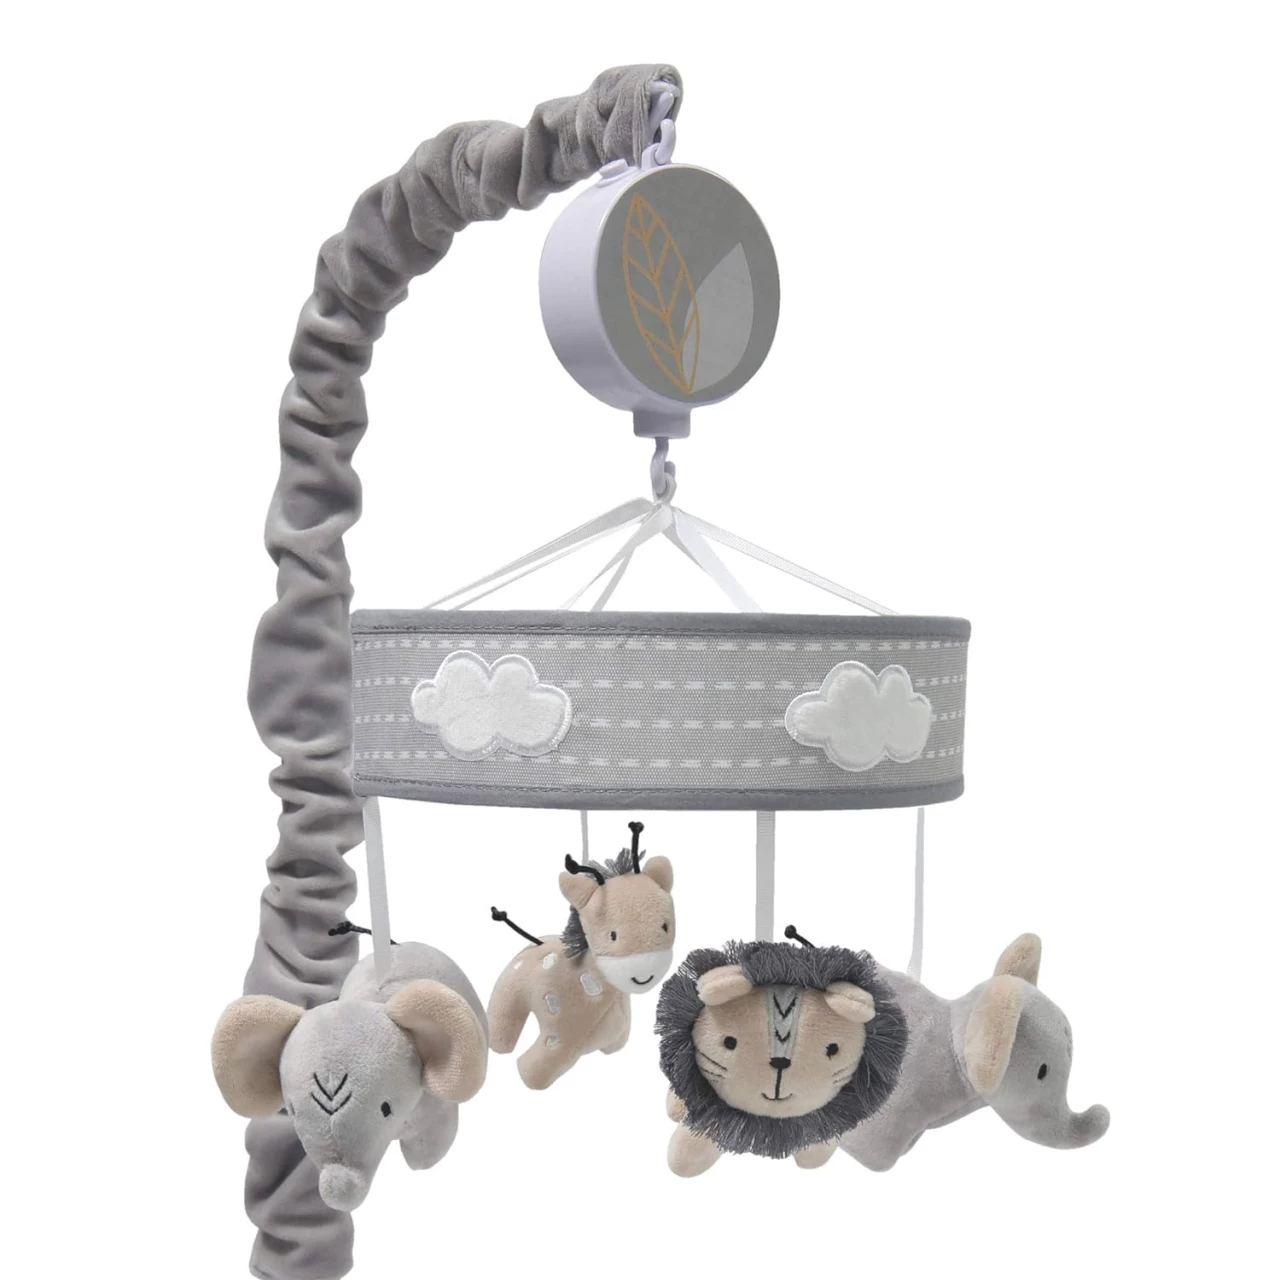 Lambs &amp; Ivy Jungle Safari Musical Baby Crib Mobile - Gray, Beige, White, Animals